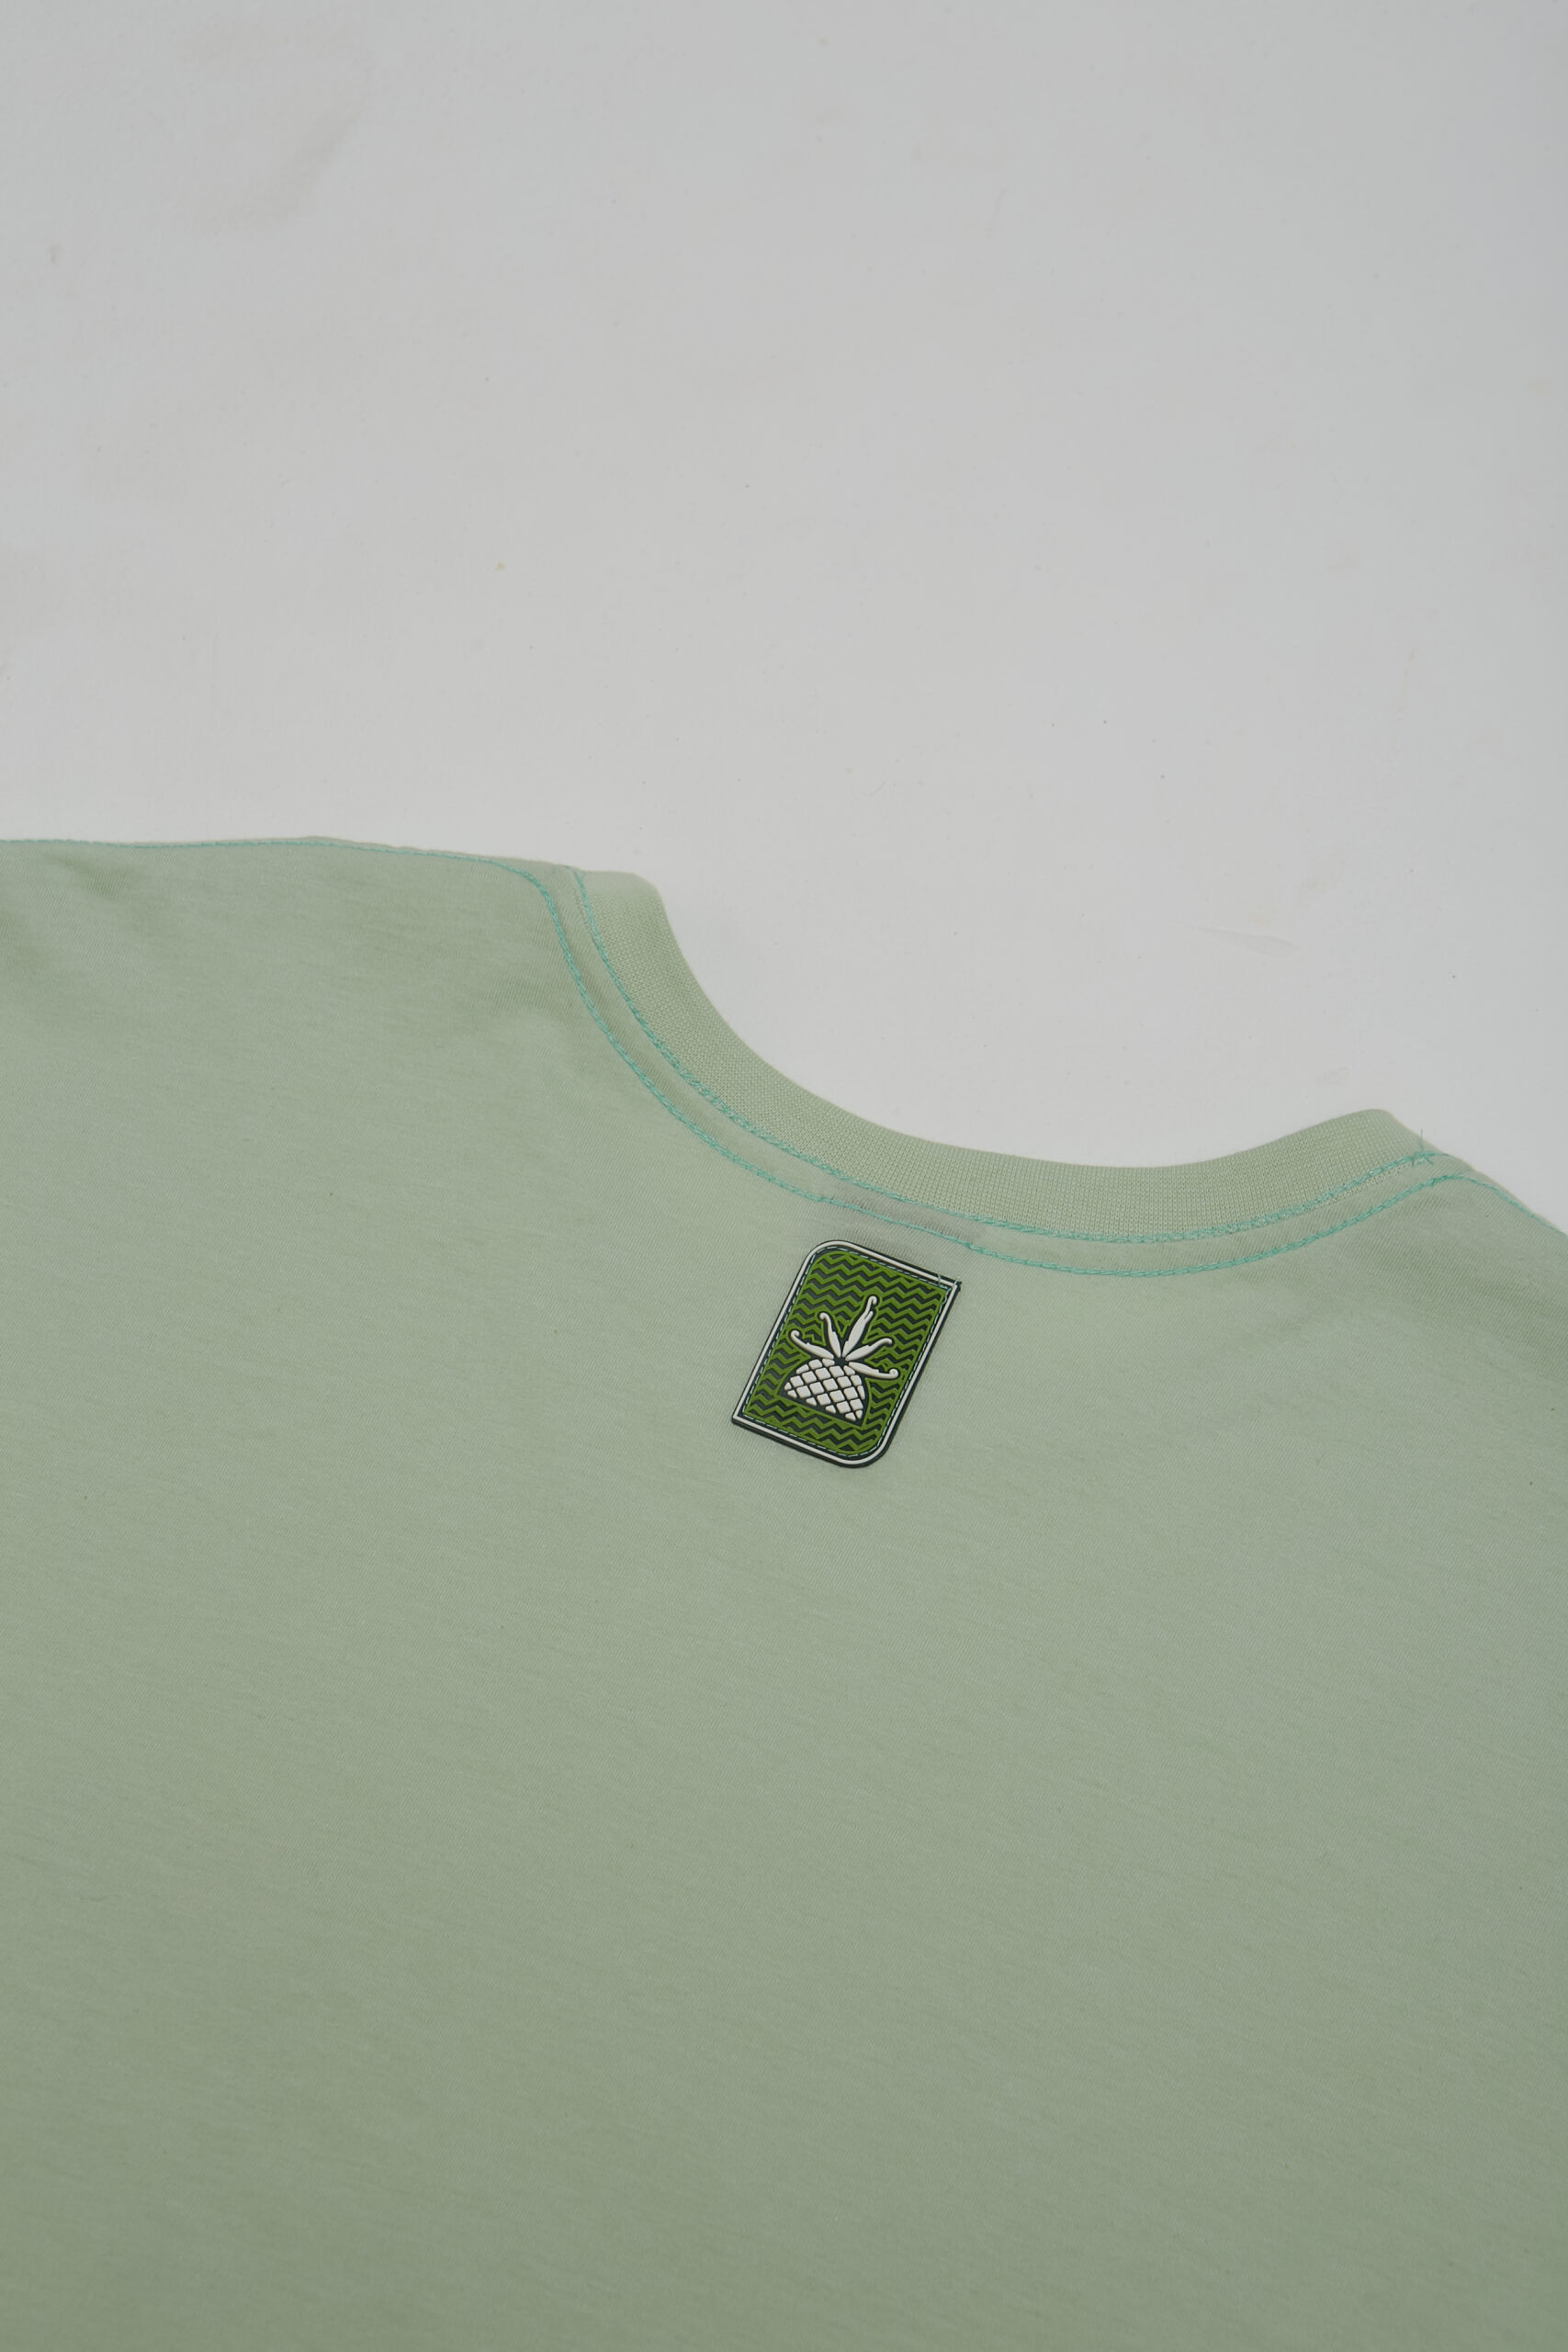 Camisa Básica Colors 22 Verde - Site Oficial da Pineapple